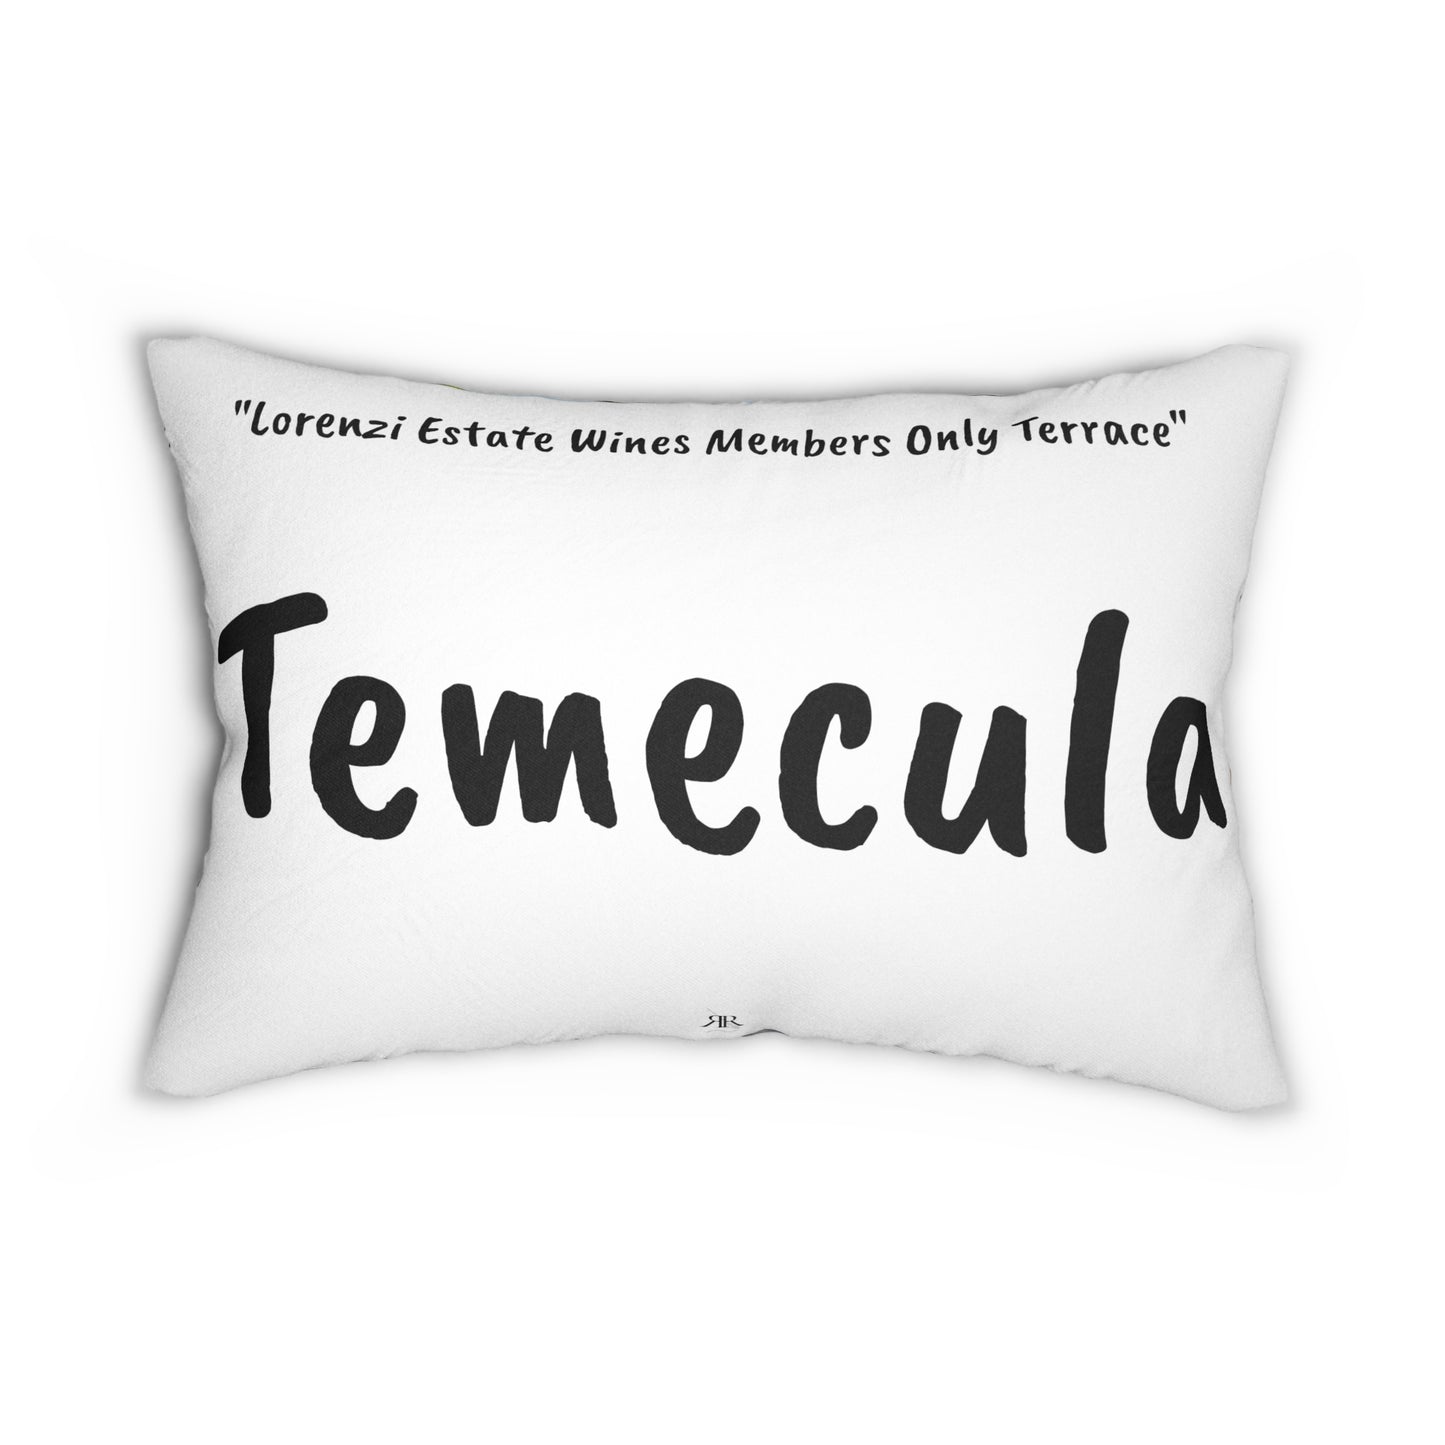 Temecula Lumbar Pillow featuring "Lorenzi Estate Wines Members only Terrace" painting and "Temecula"